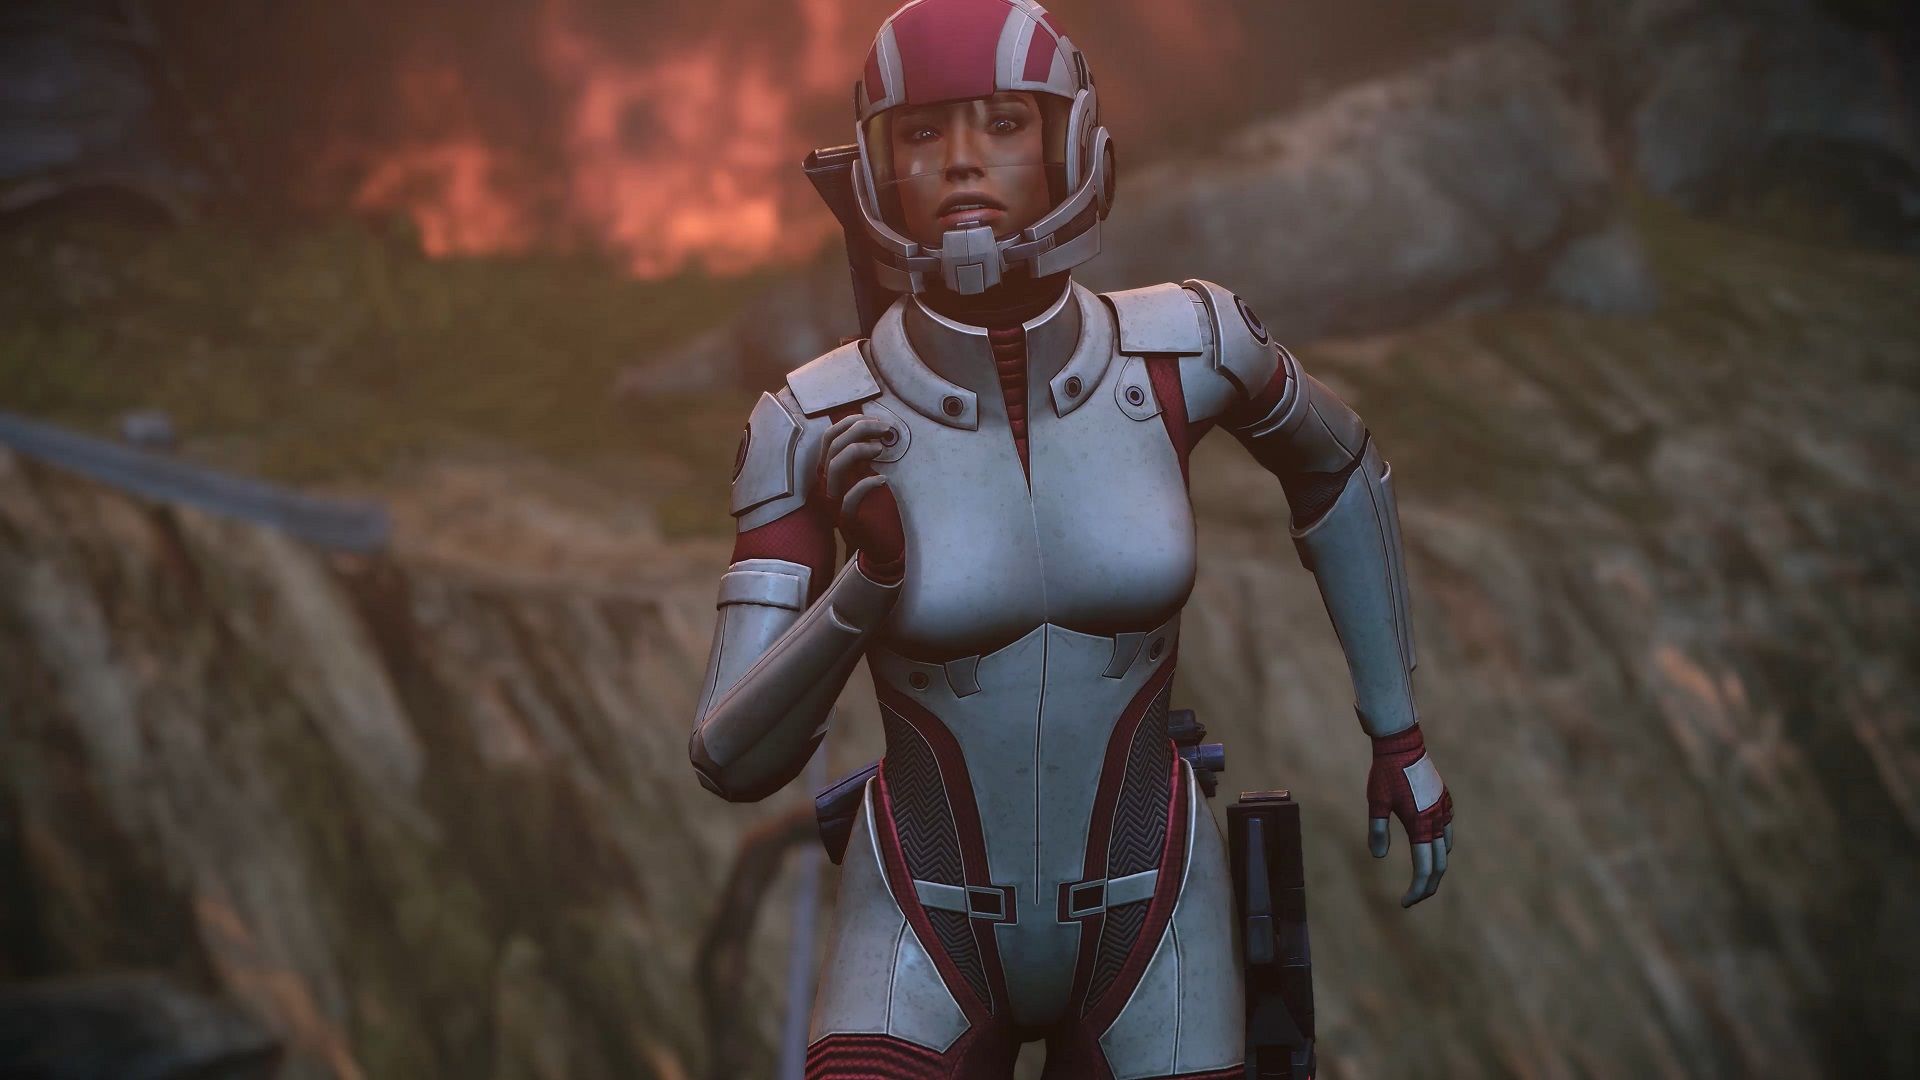 Ashley running in Mass Effect